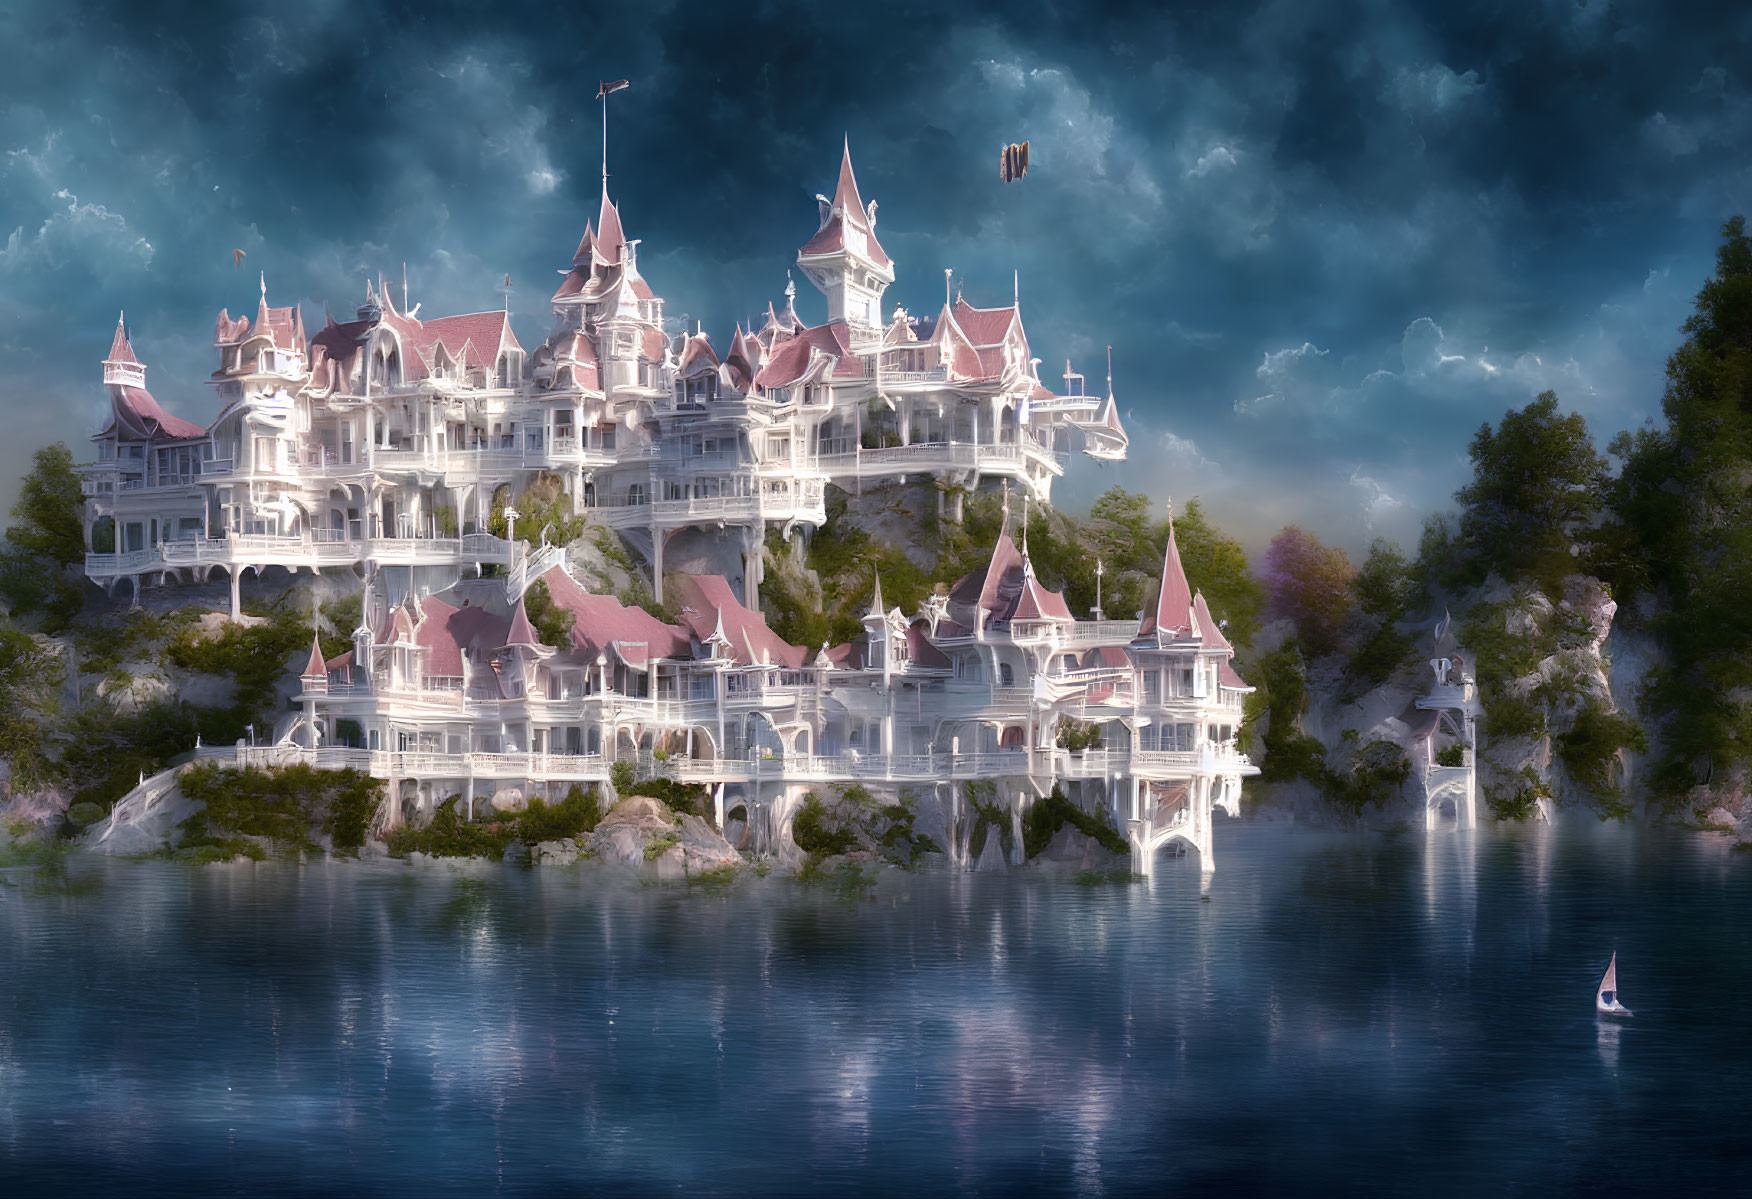 Majestic multi-tiered fantasy castle reflecting on calm lake in serene landscape